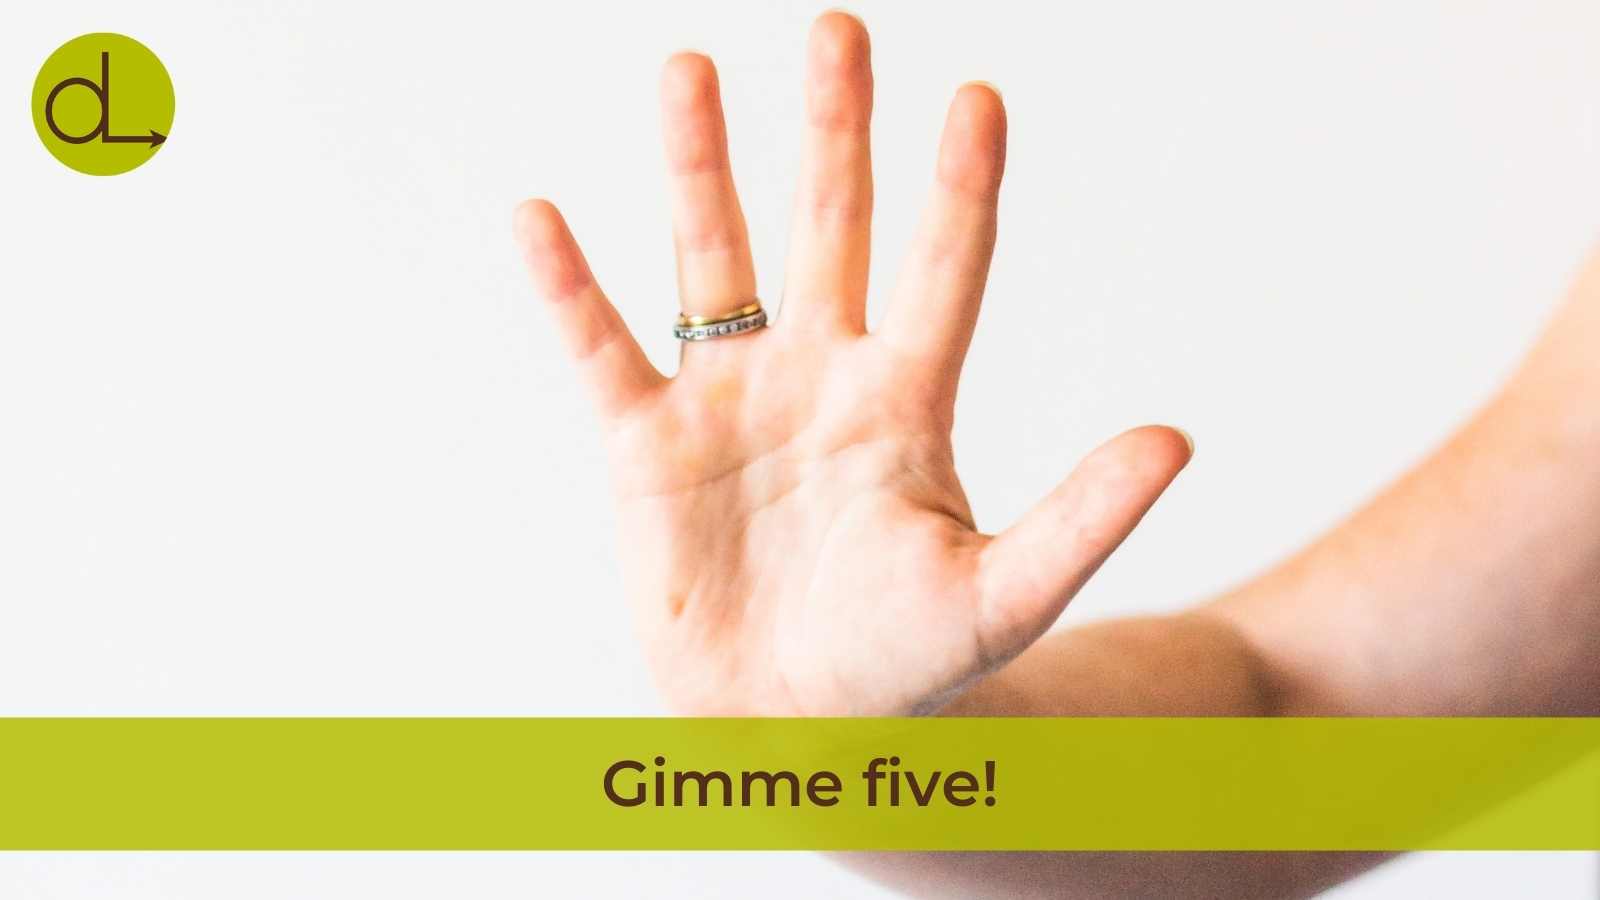 Gimme five, high five hand